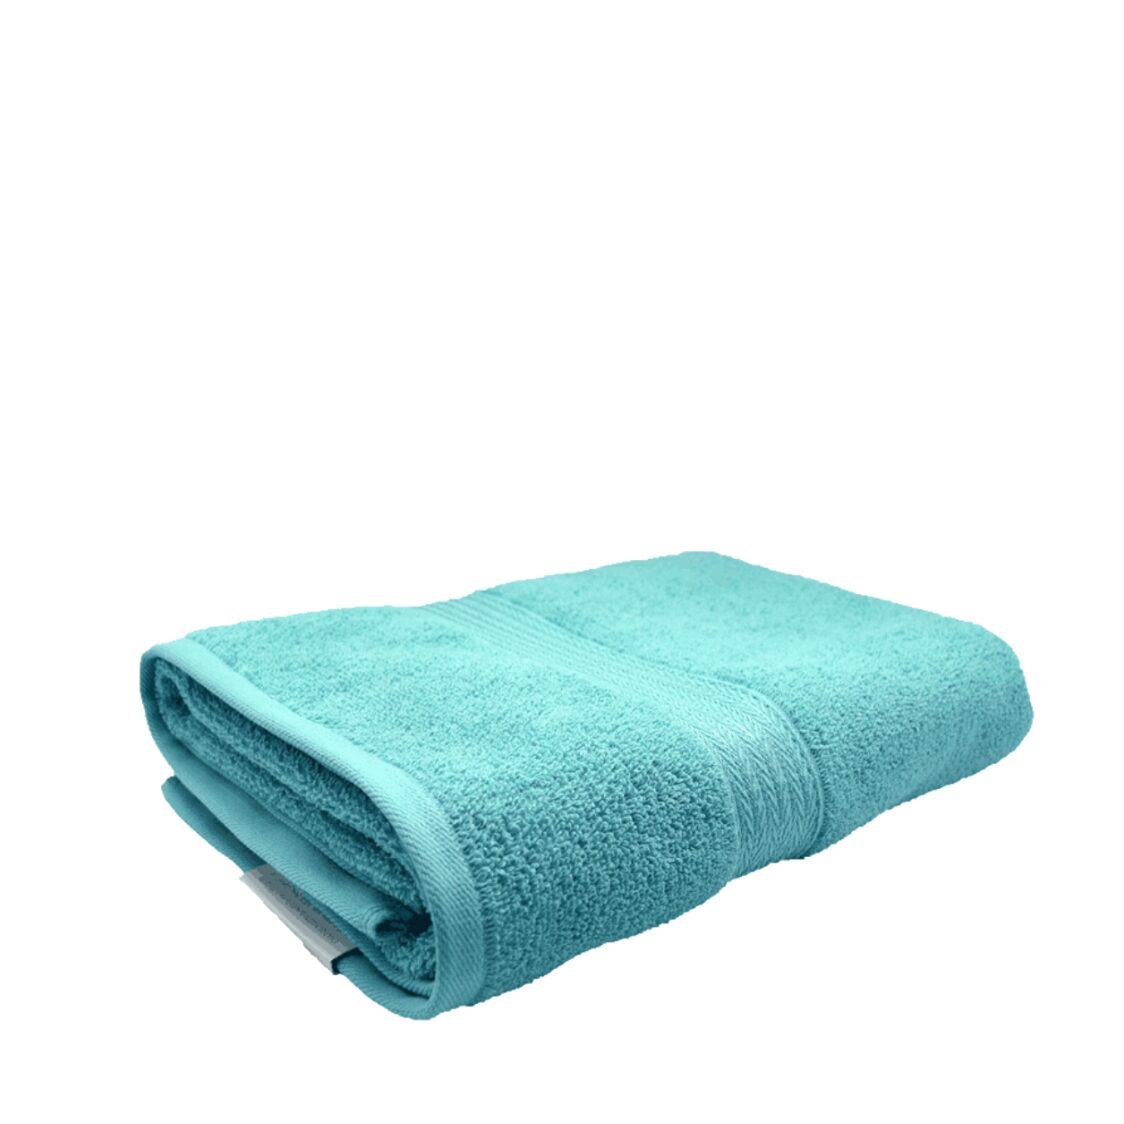 Charles Millen Suite Collection Finsbury Bath Towel 76X137cm Turquoise Set Of 2